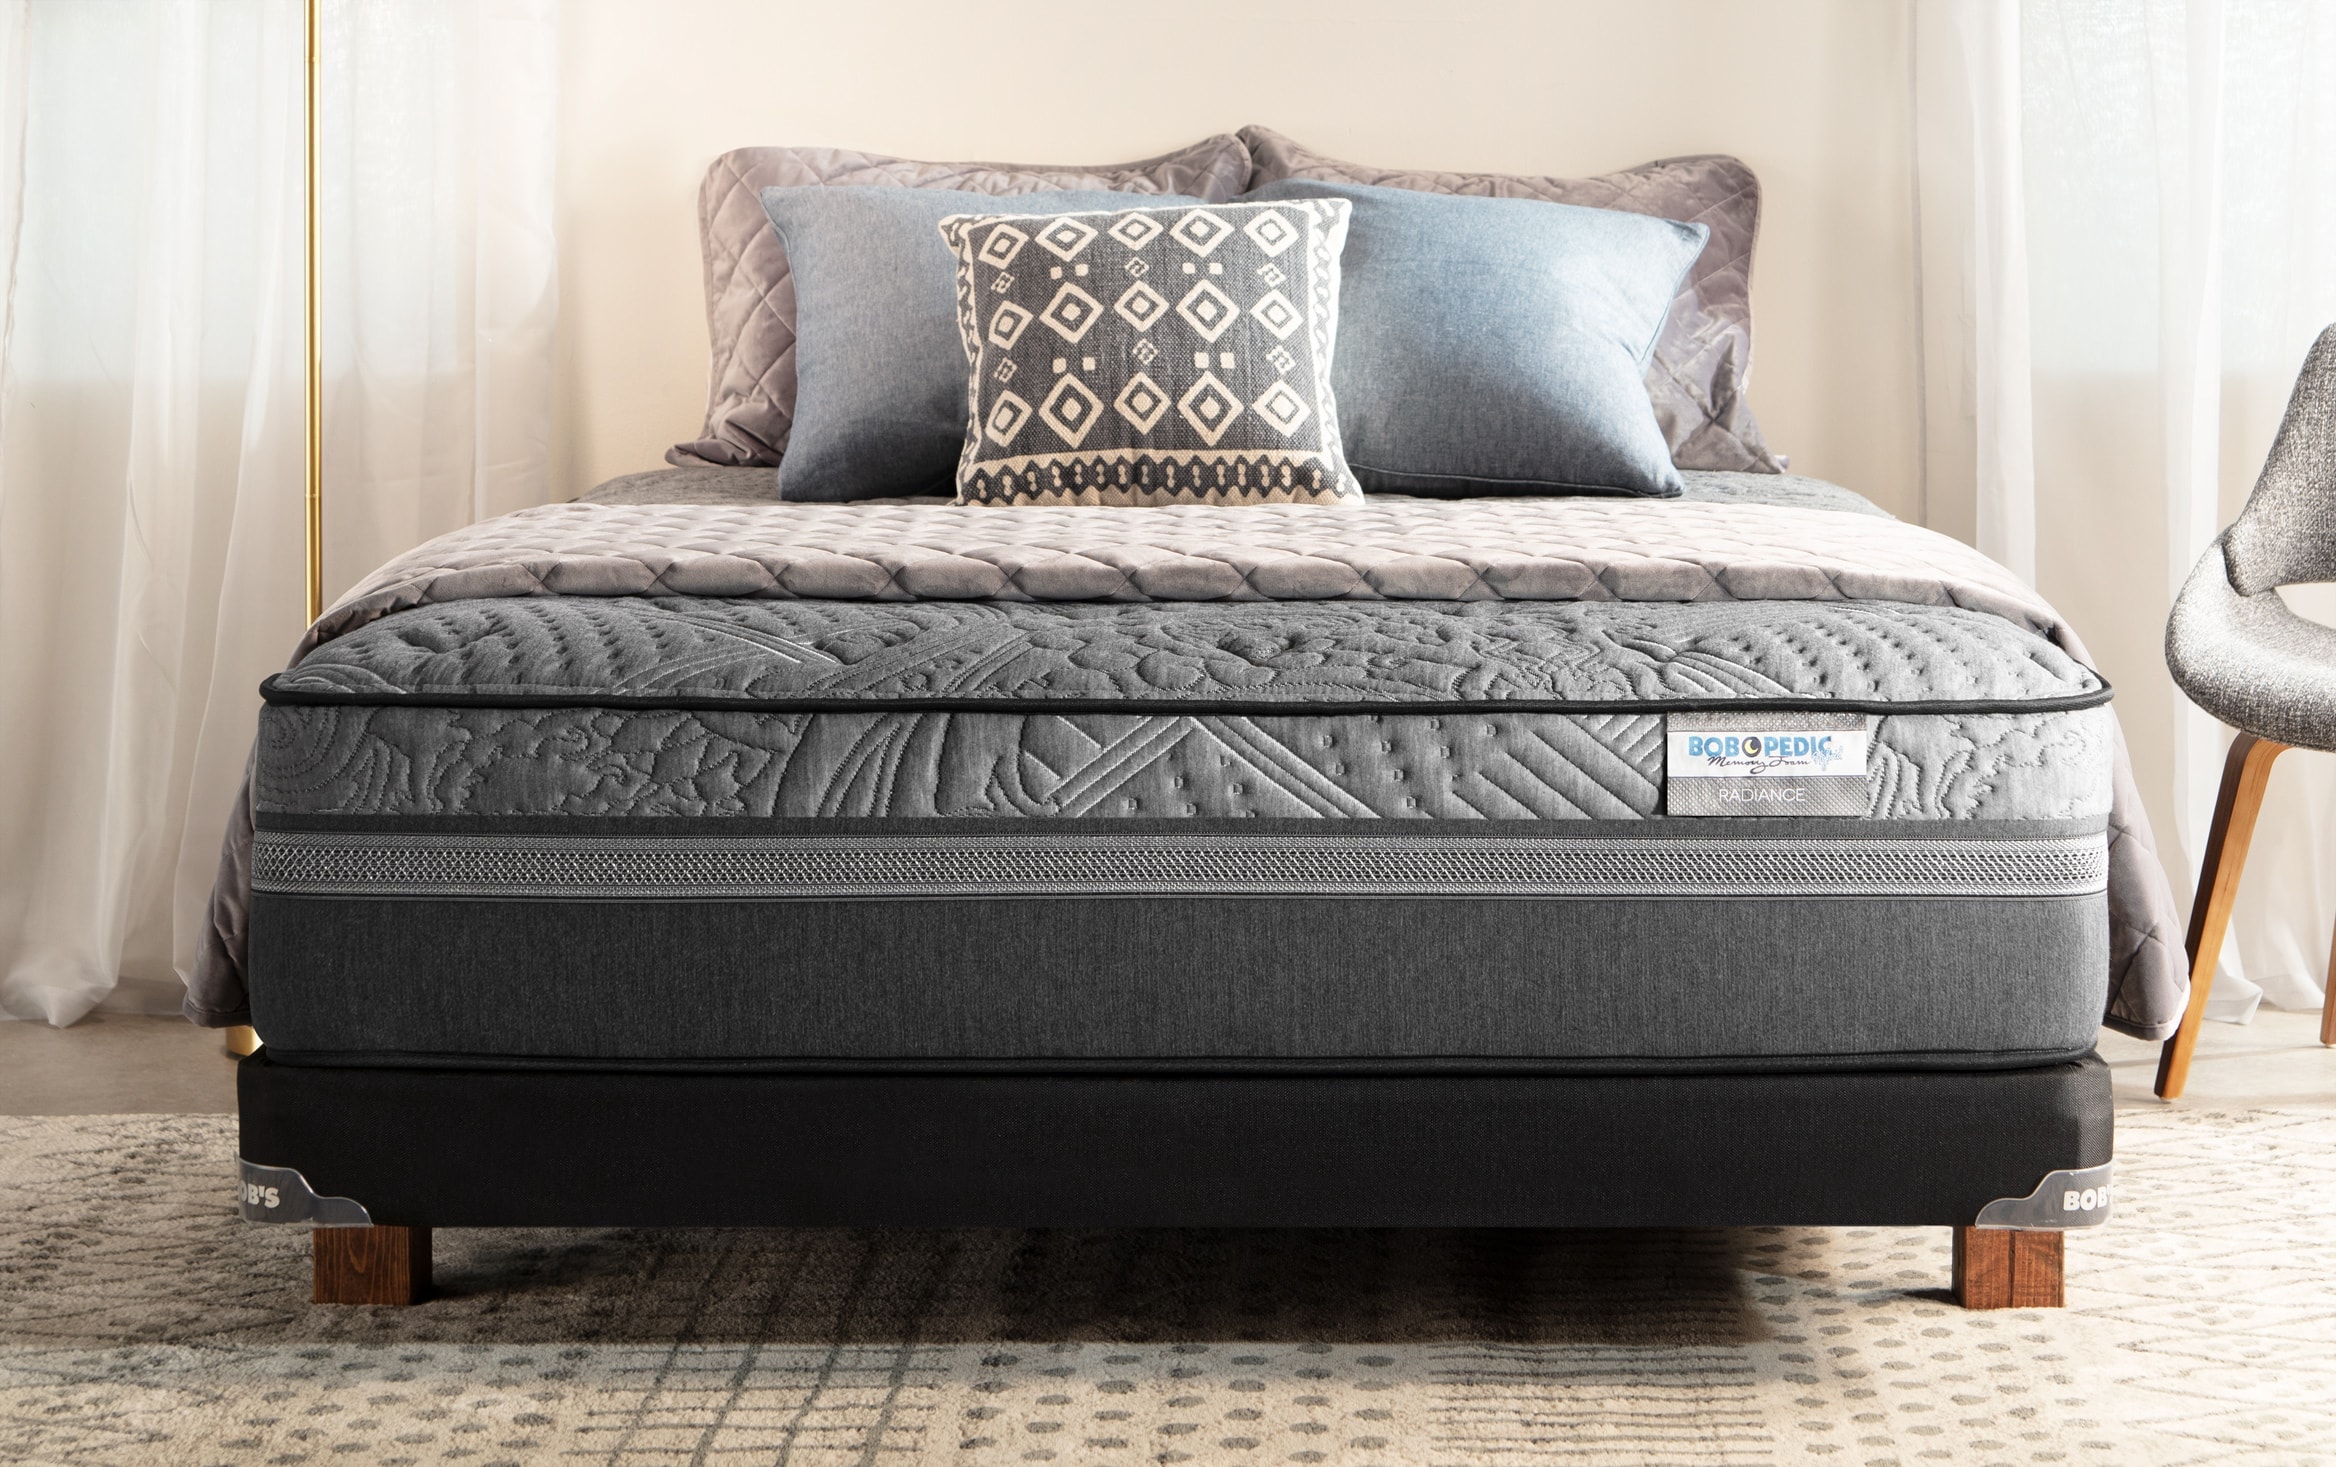 bobs hybrid radiance mattress reviews